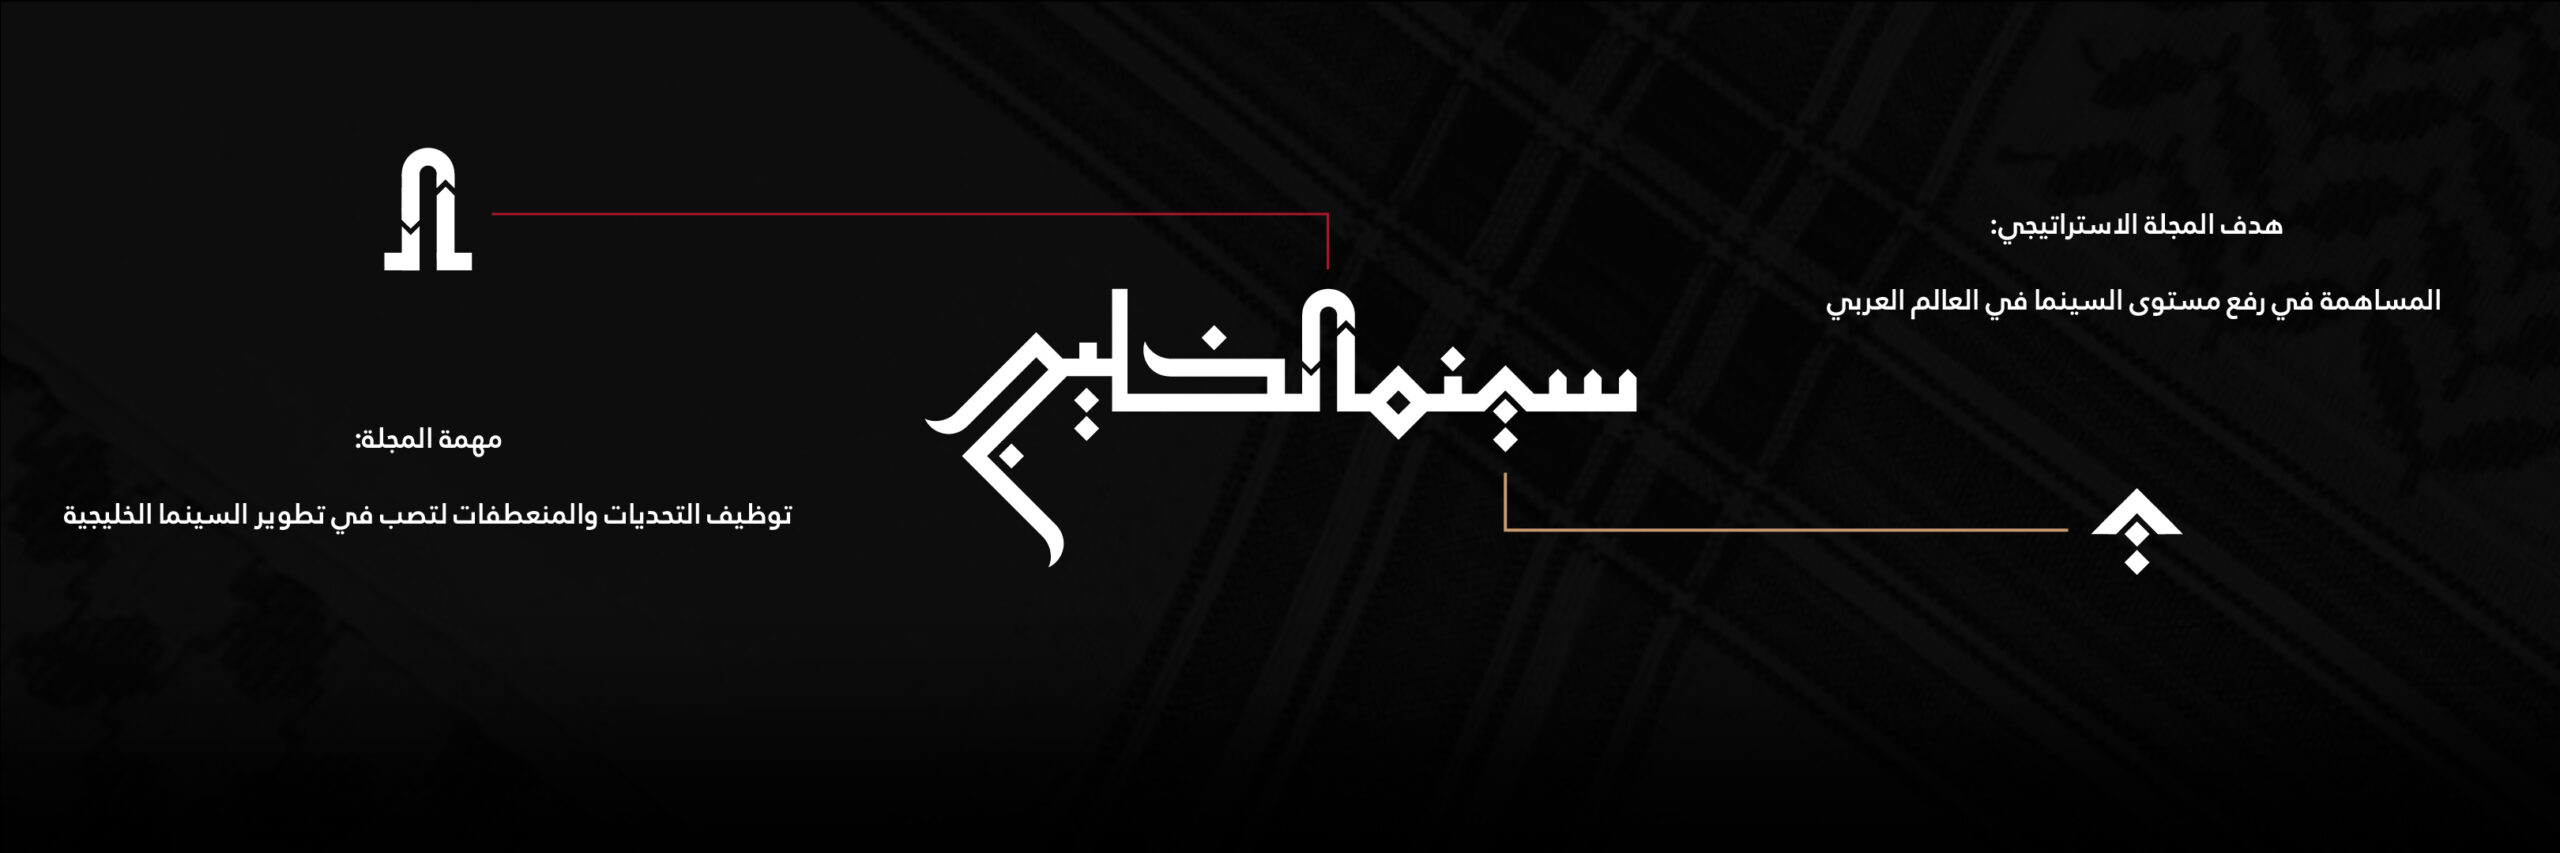 Gulf Cinema Magazine | Branding done by creative director Loay Tattan تصميم الهوية التجارية لمجلة سينما الخليج عن طريق المخرج الابداعي لؤي التتان